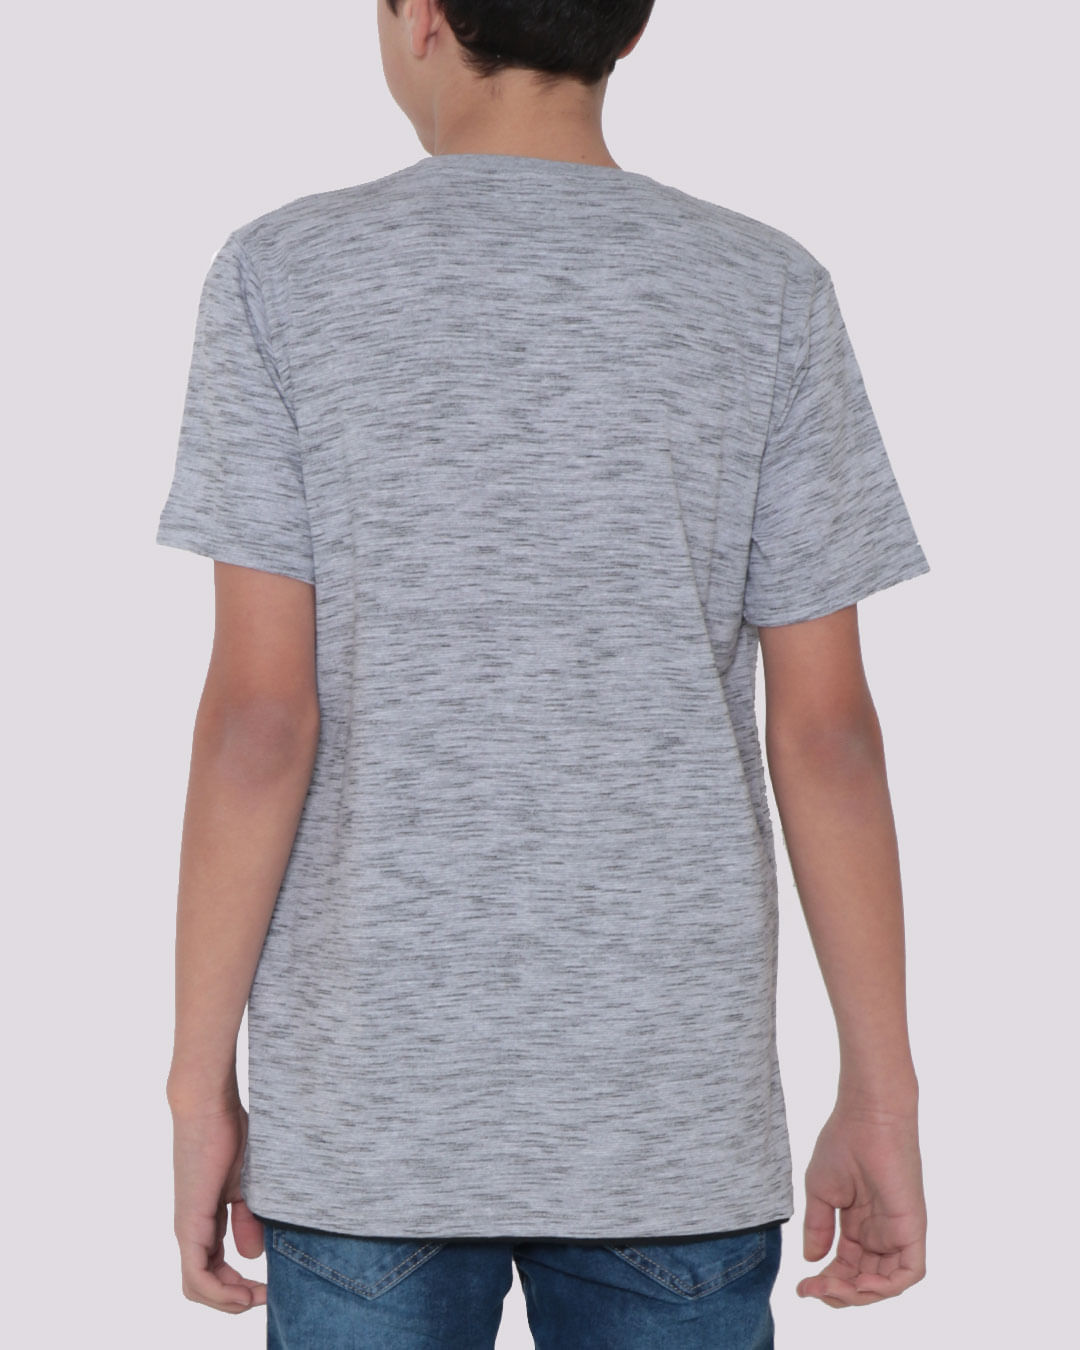 Camiseta-Juvenil-Estampa-Skate-Flame-Cinza-Medio